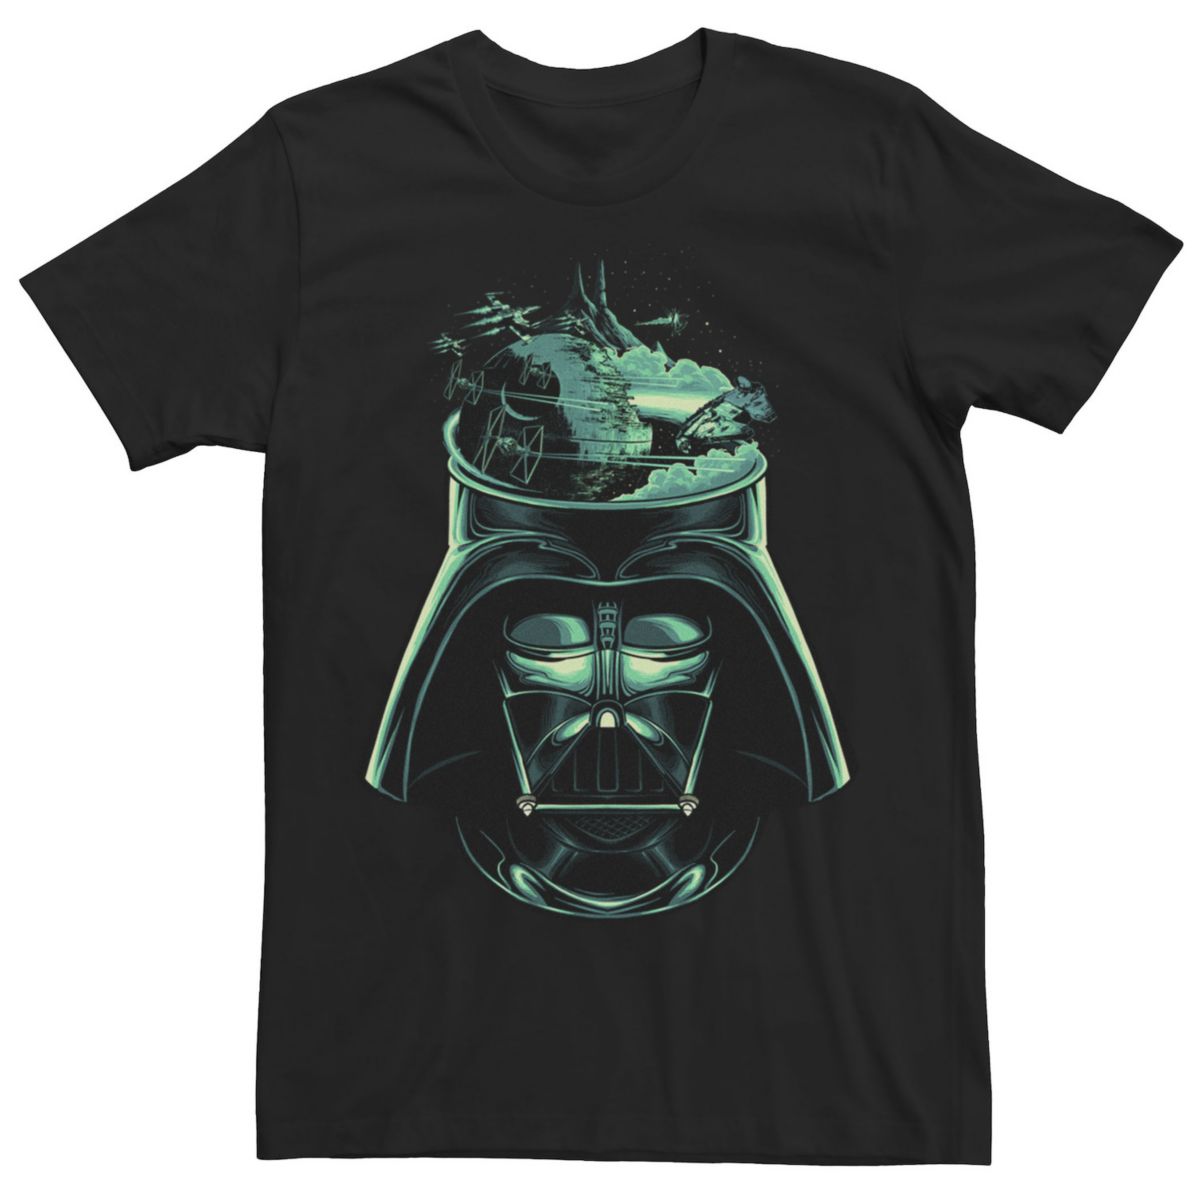 Мужская футболка с рисунком Дарта Вейдера и Дарта Вейдера Star Wars Star Wars